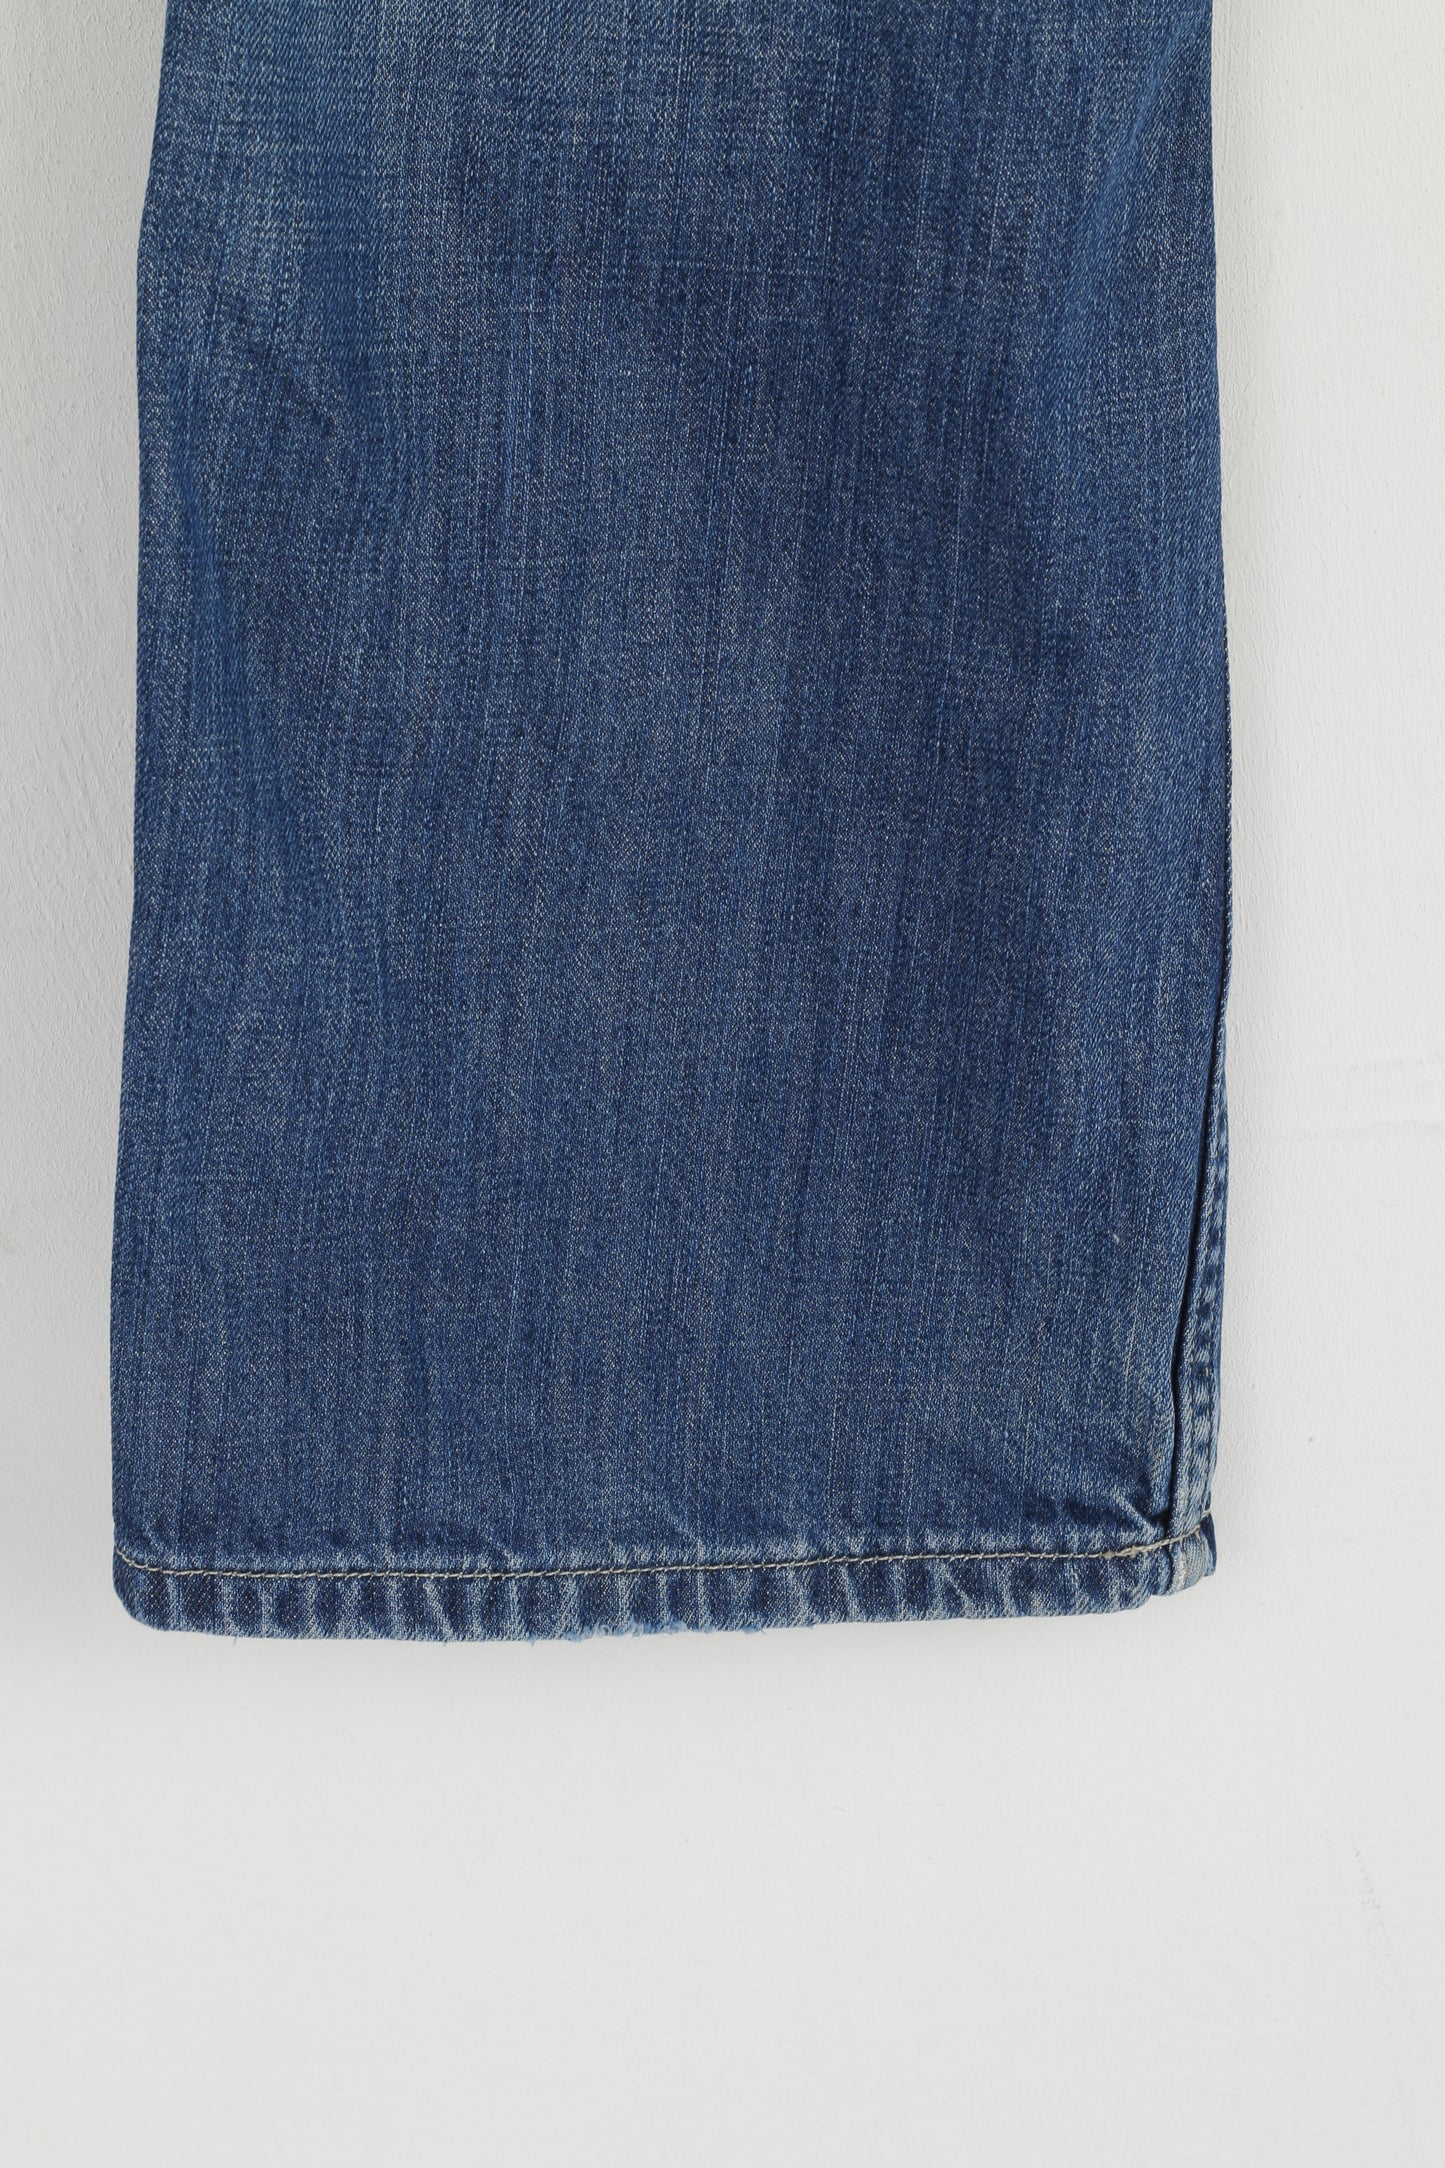 Wrangler Women 28/32 Jeans Trousers Navy Cotton Sharkey Bootcut Denim Pants